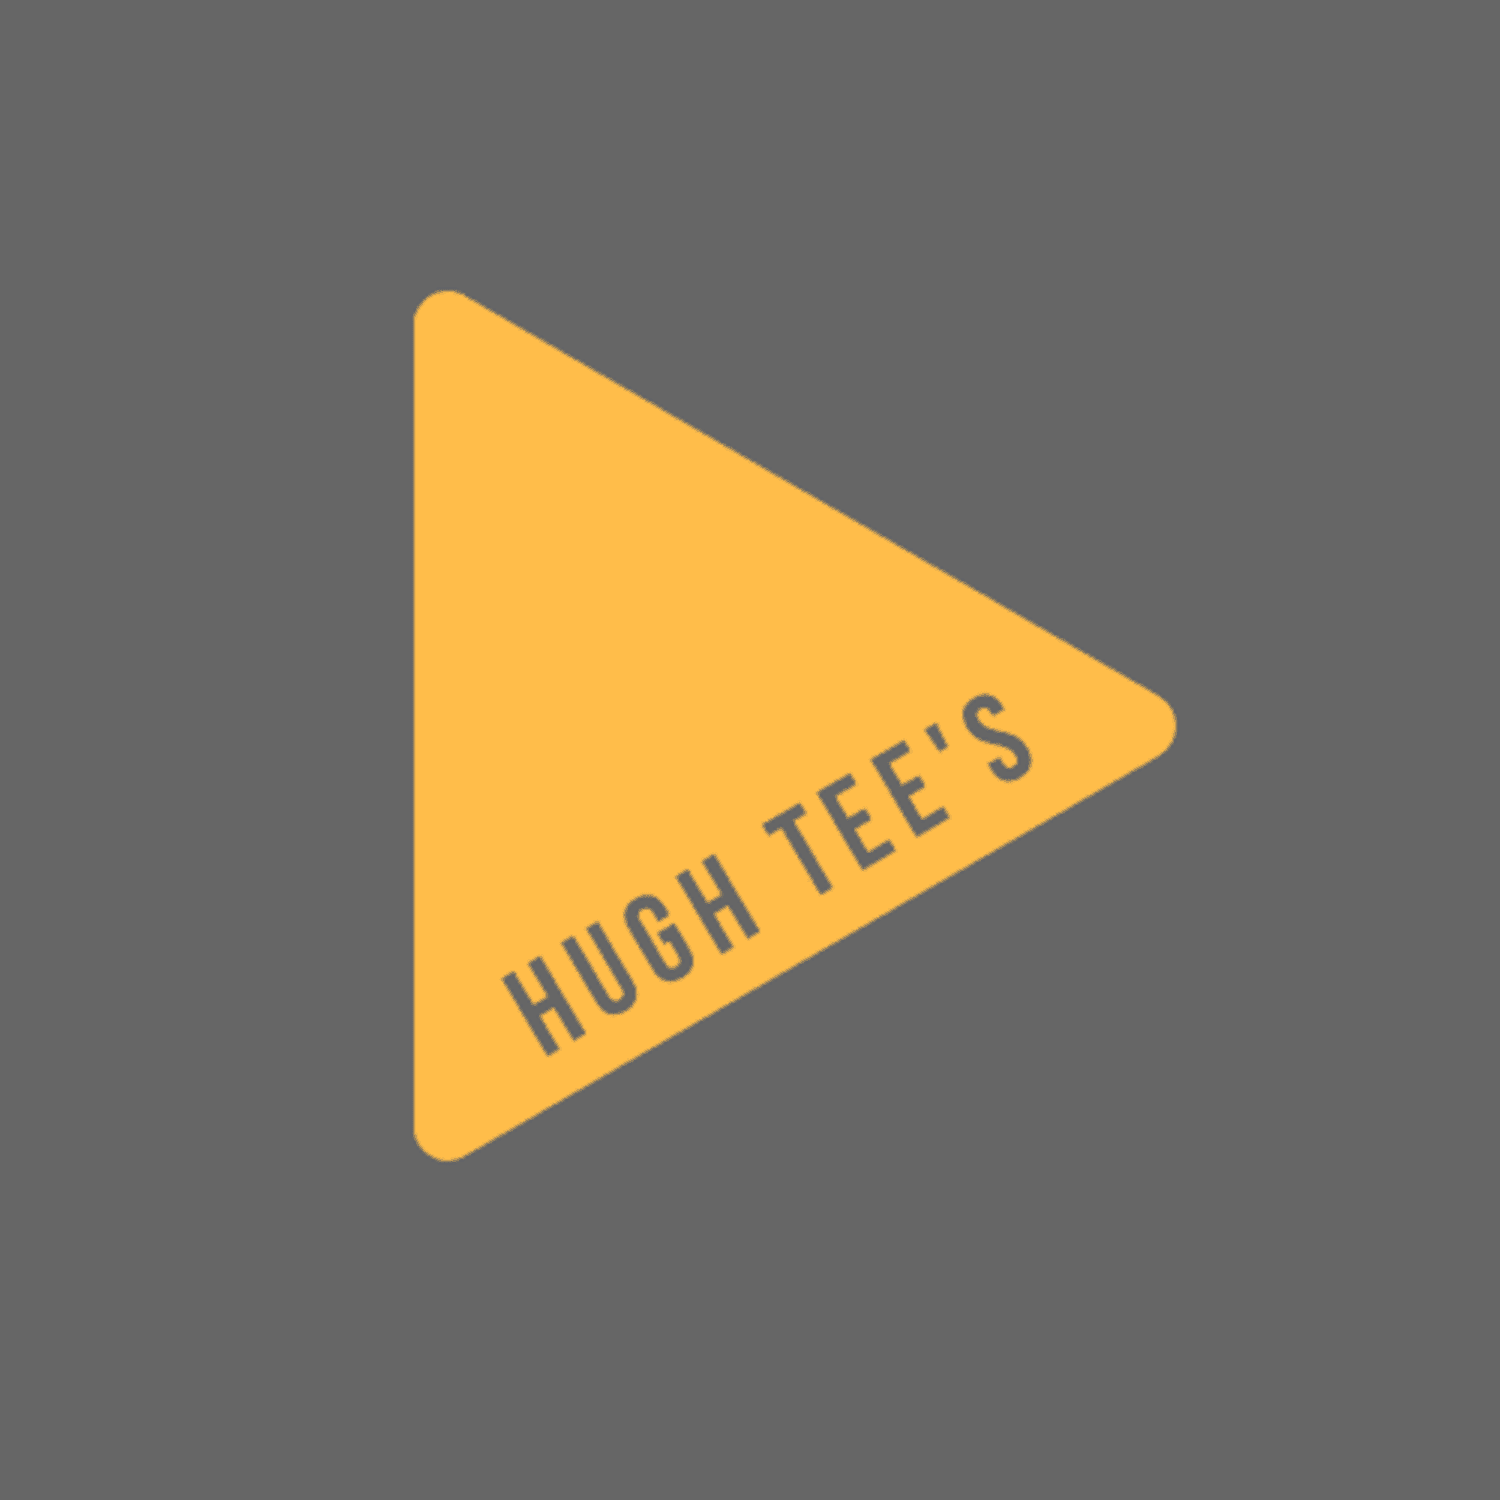 Hugh Tee's